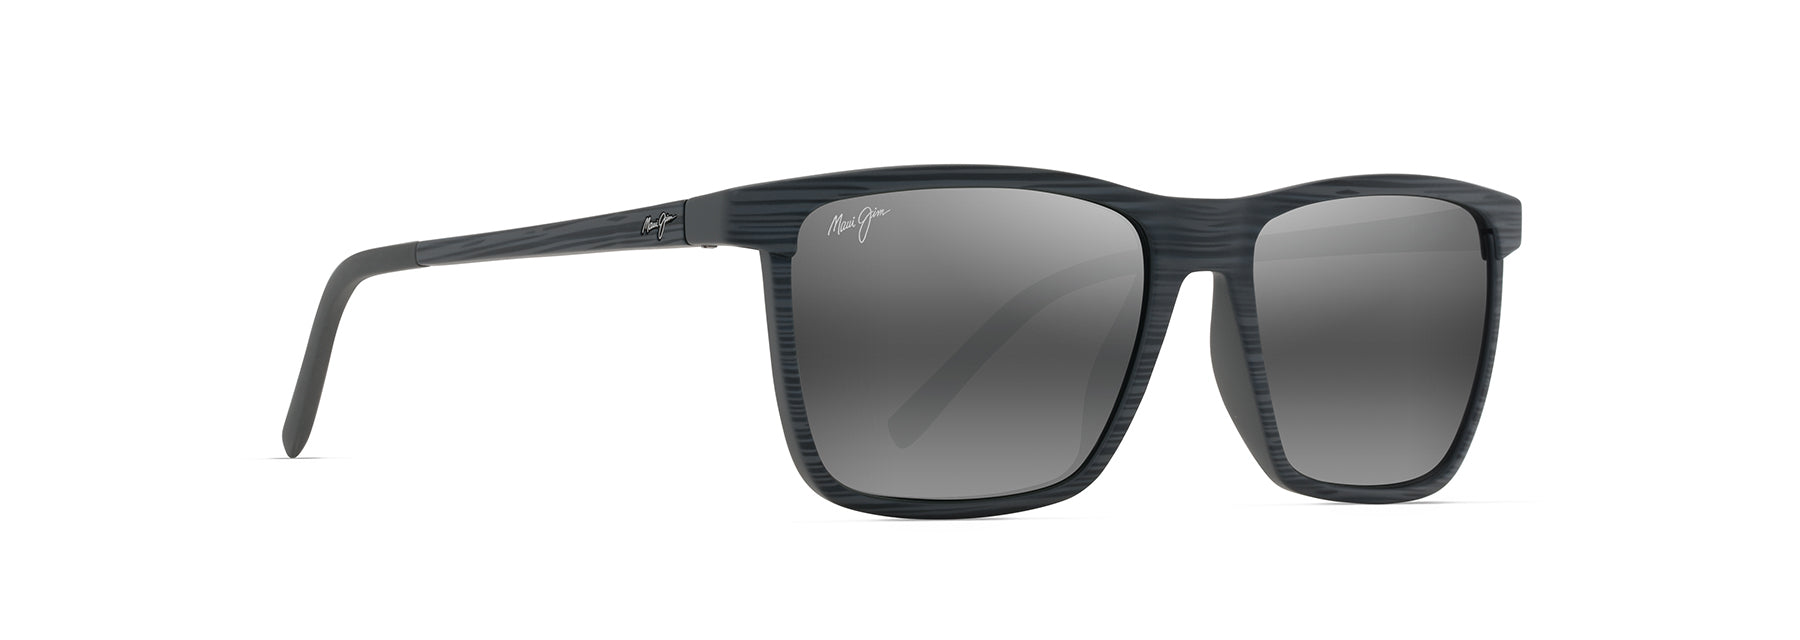 Maui Jim One Way American Sunglass – Sunglasses